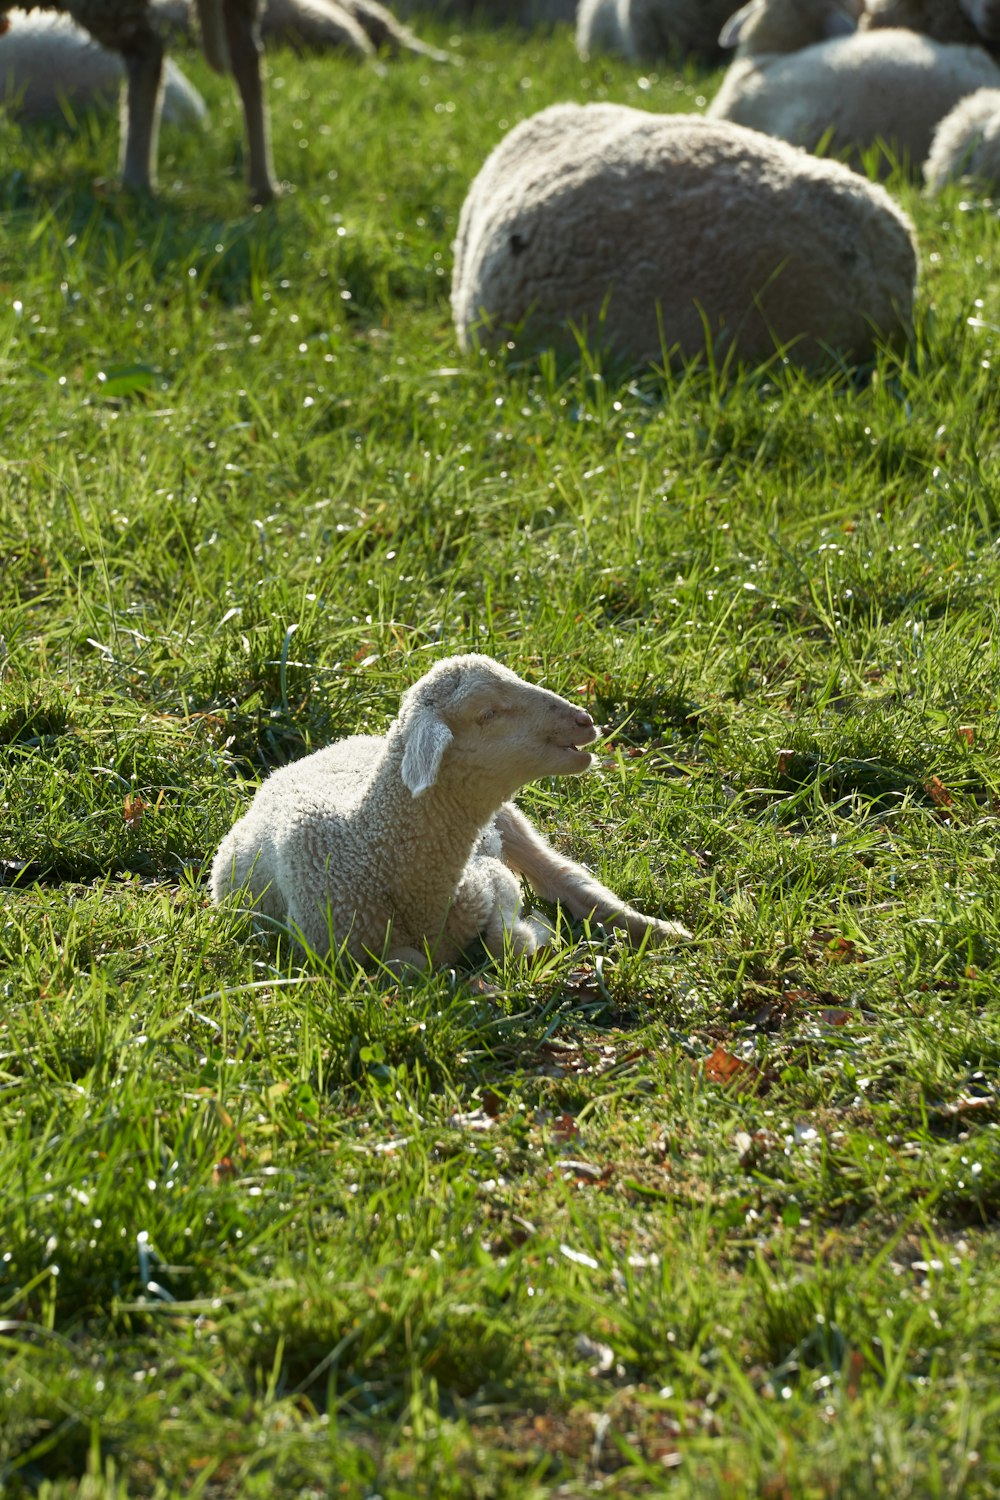 white sheep on green grass during daytime